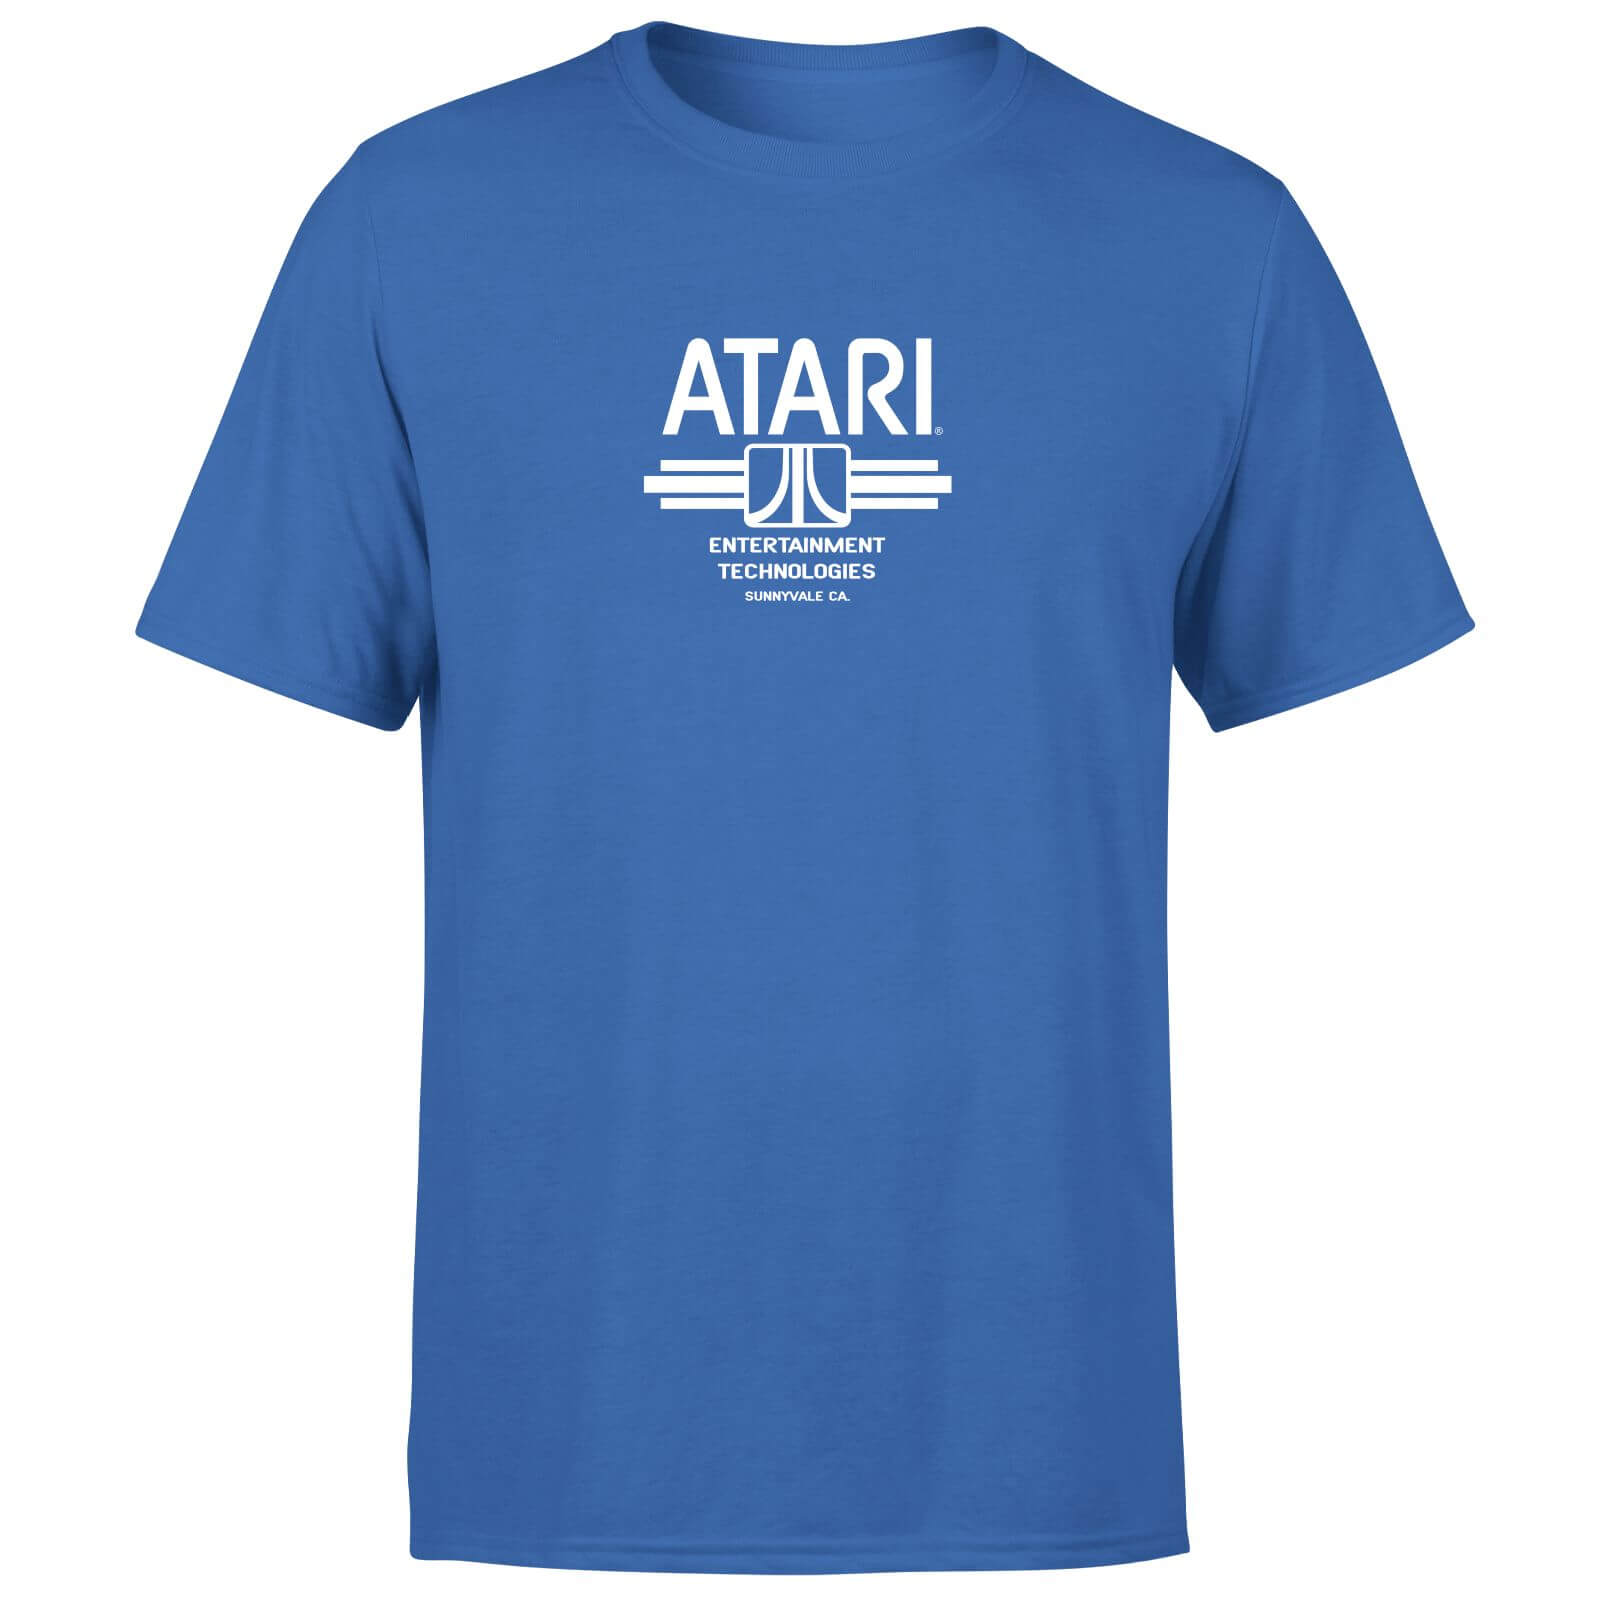 Atari Blue Tee Men's T-Shirt - Royal Blue - S - royal blue